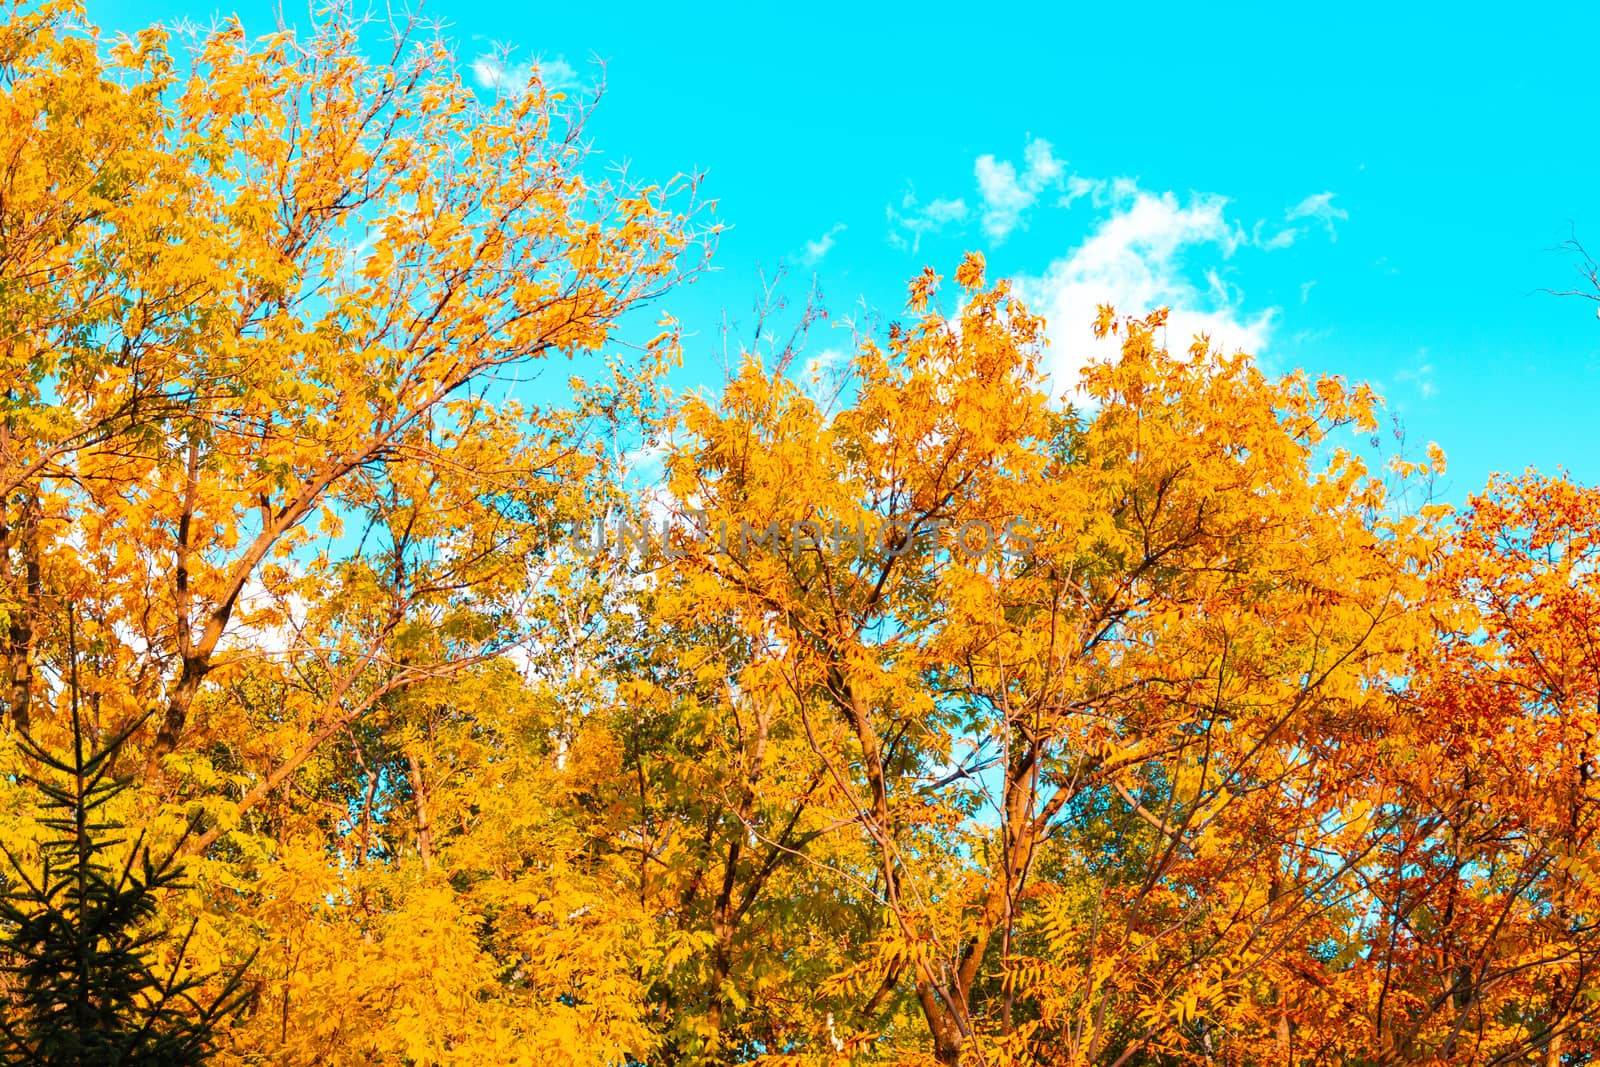 Autumn trees against the bright blue sky by rdv27